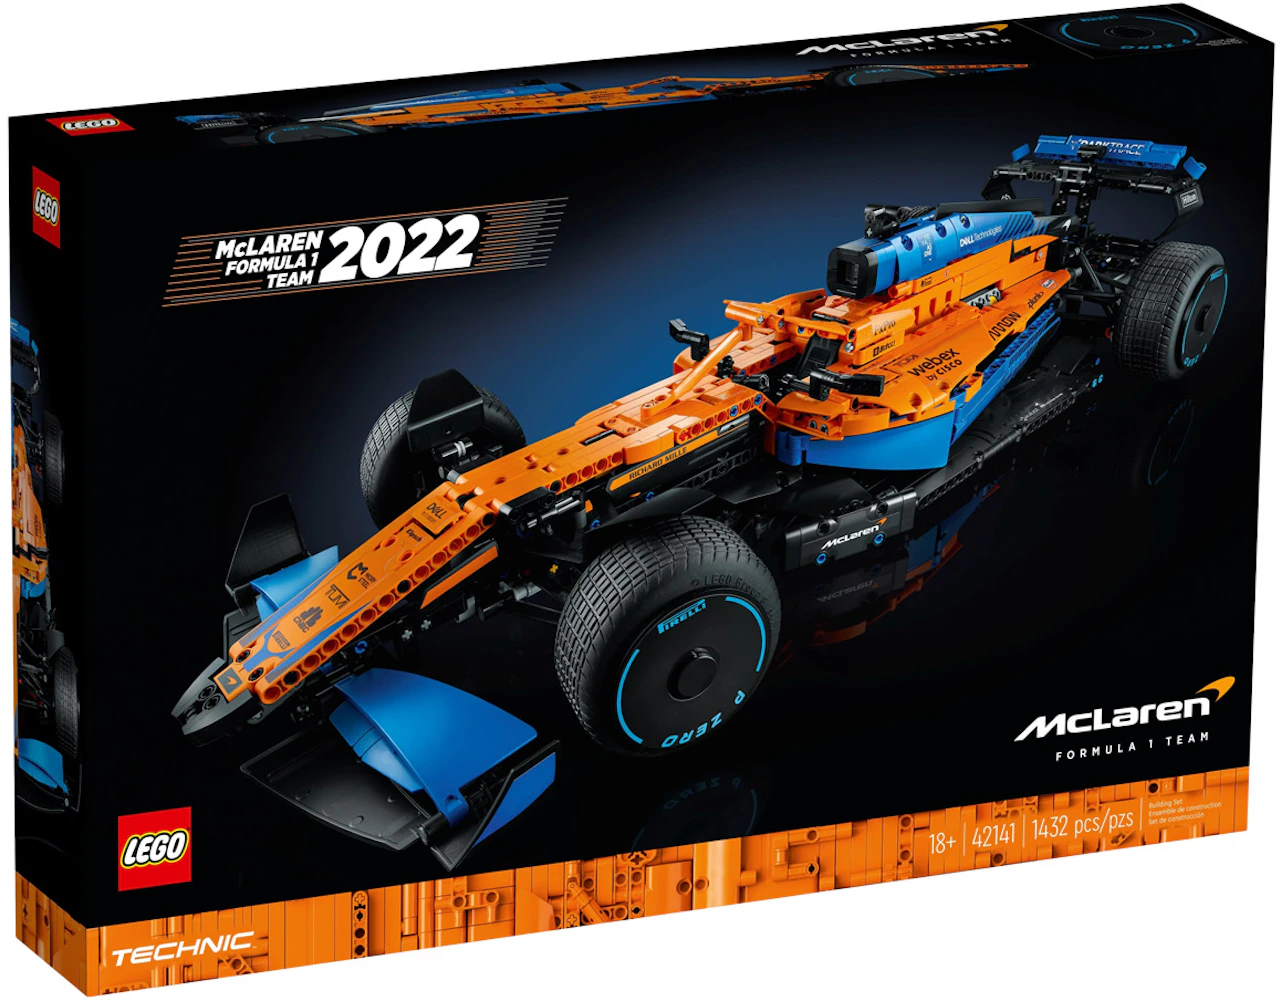 https://images.stockx.com/images/LEGO-Technic-Mclaren-Formula-1-Team-Race-Car-Set-42141.jpg?fit=fill&bg=FFFFFF&w=700&h=500&fm=webp&auto=compress&q=90&dpr=2&trim=color&updated_at=1644594695